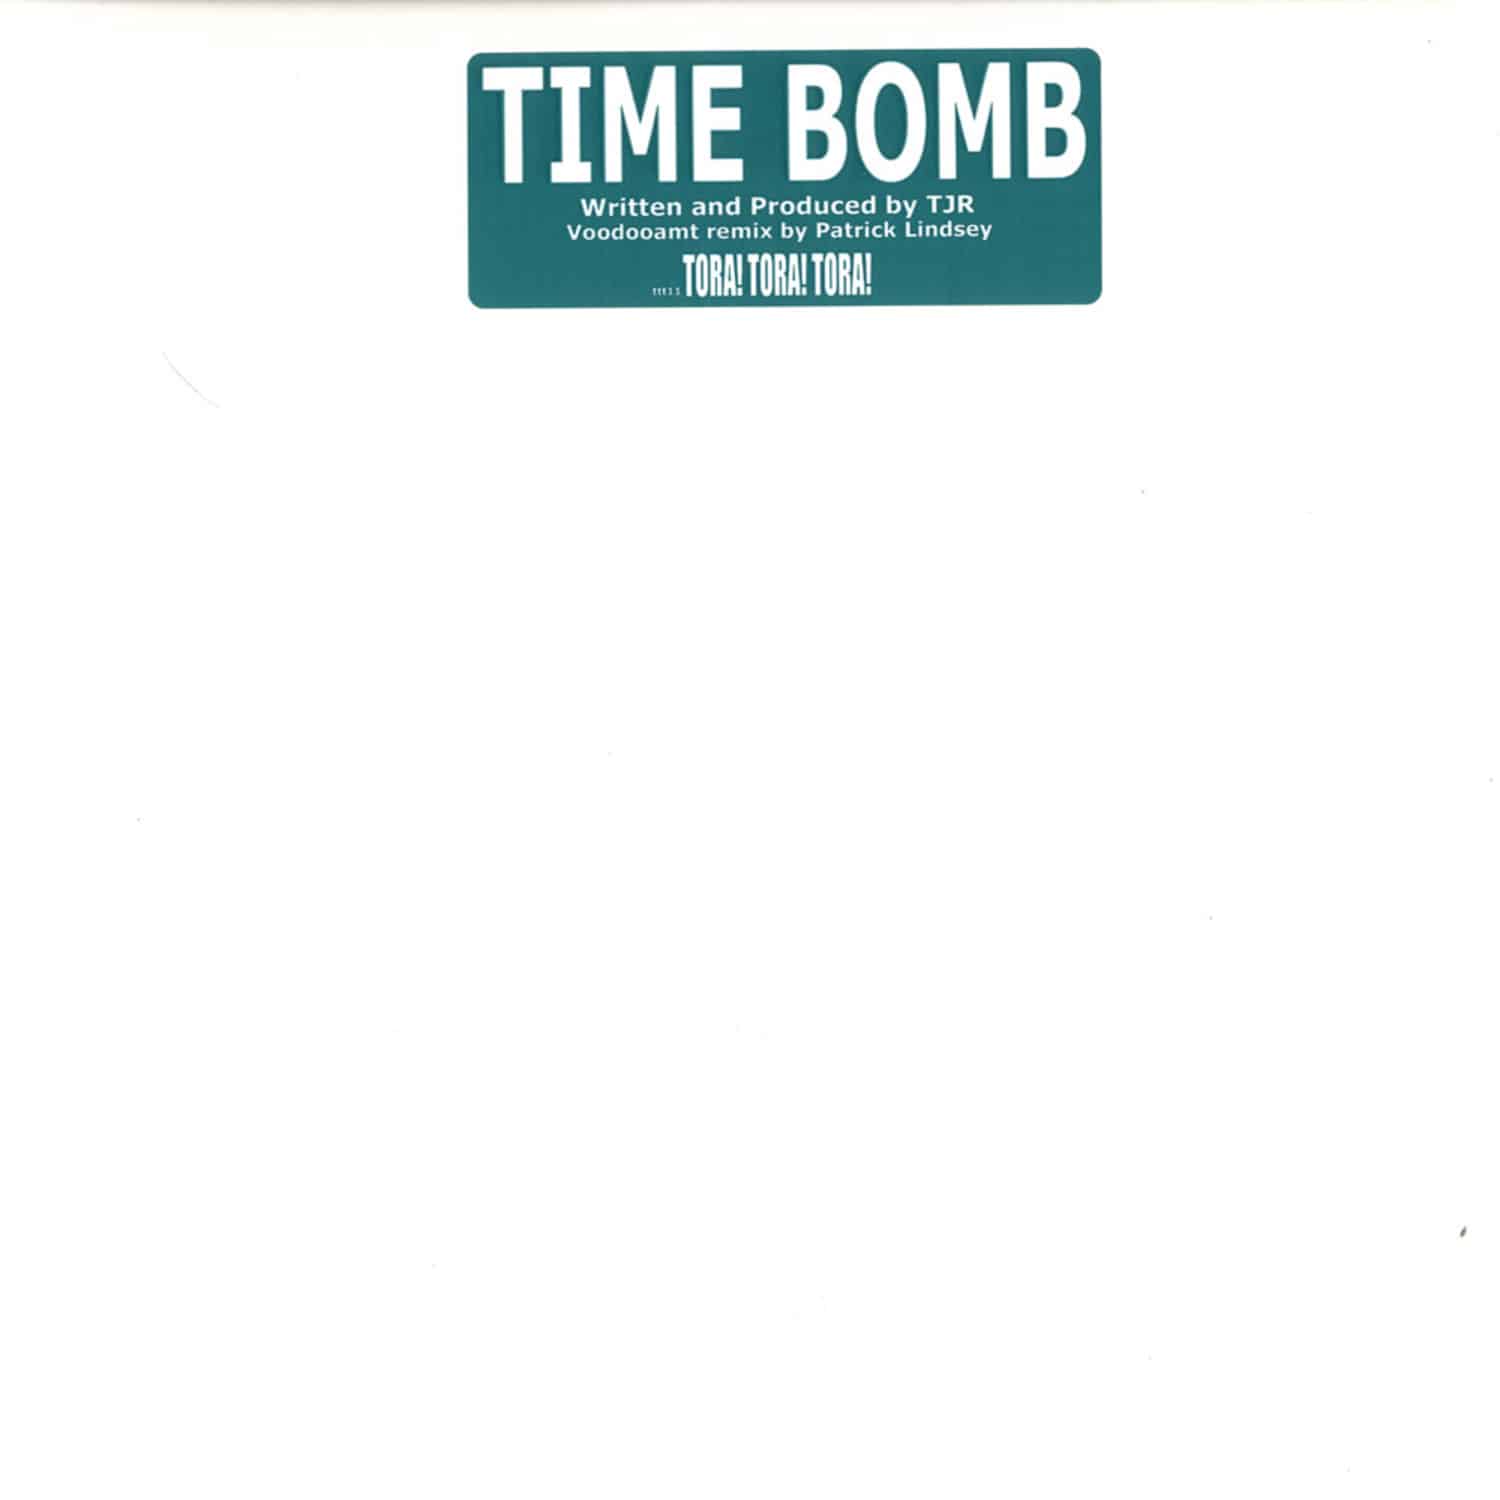 TJR - TIME BOMB - VOODOOAMT REMIX BY PATRICK LINDSEY